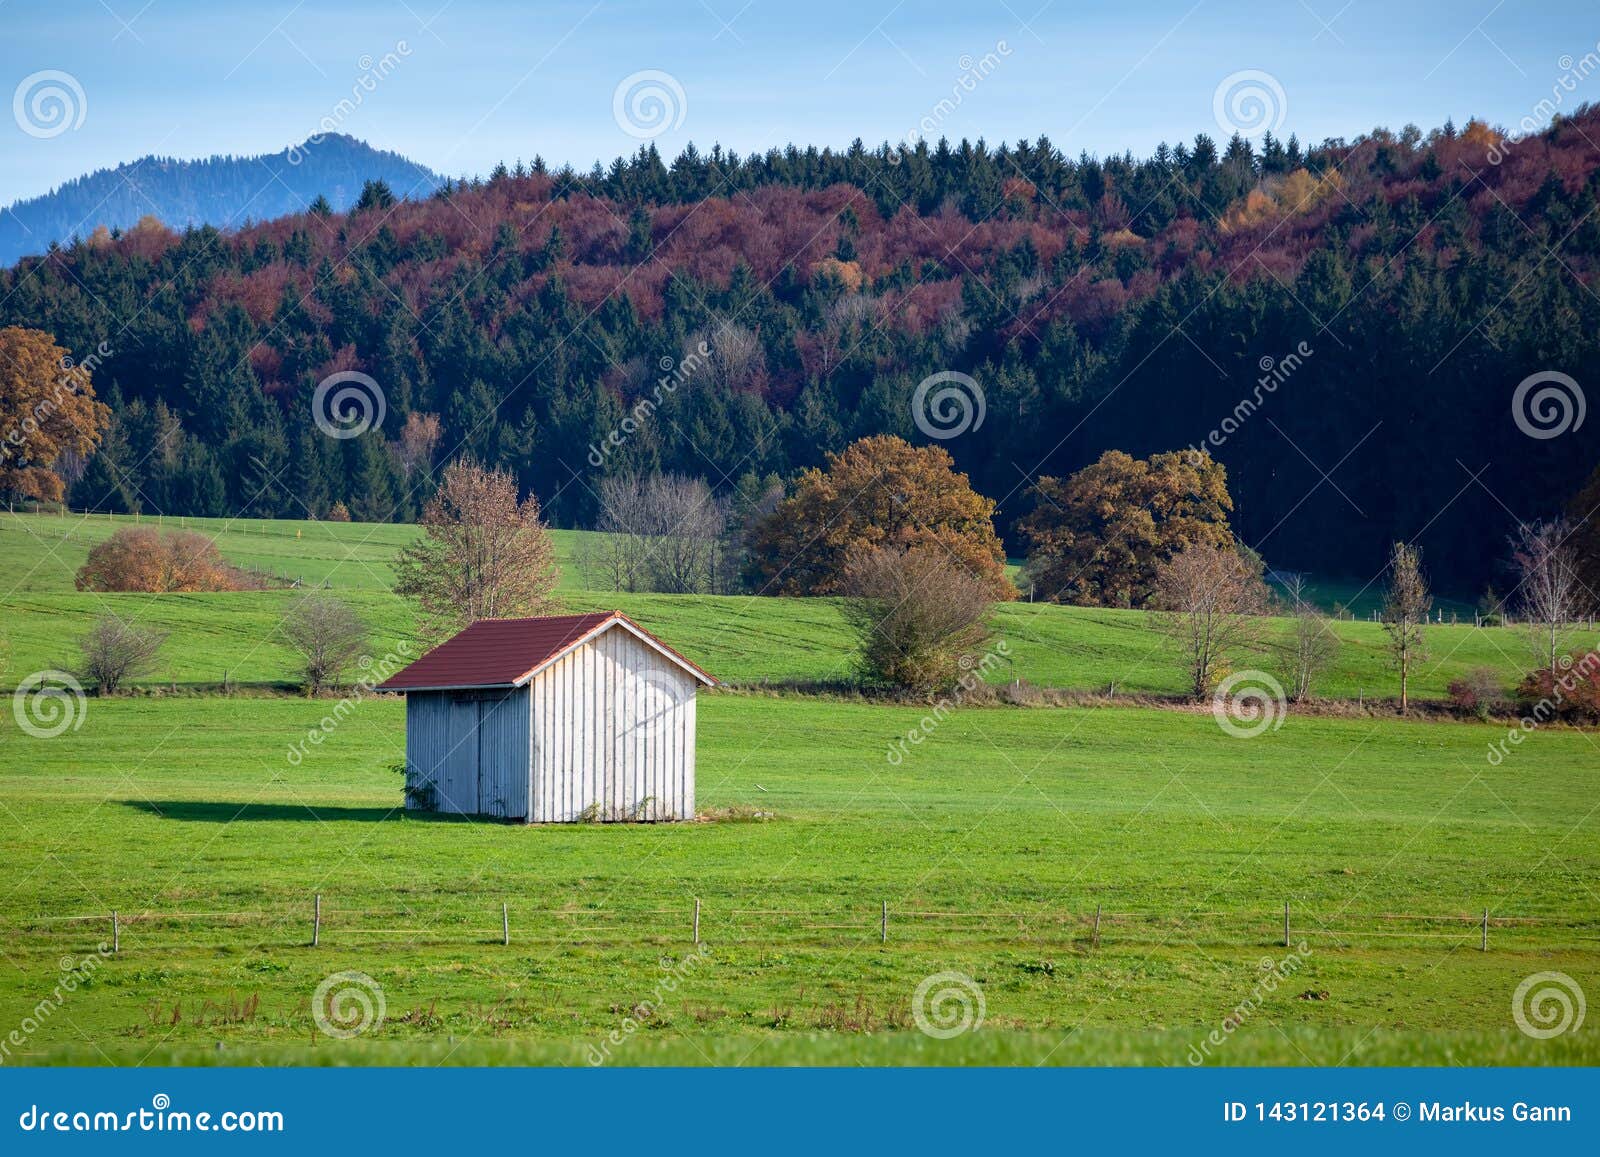 autumn scenery at murnau bavaria germany